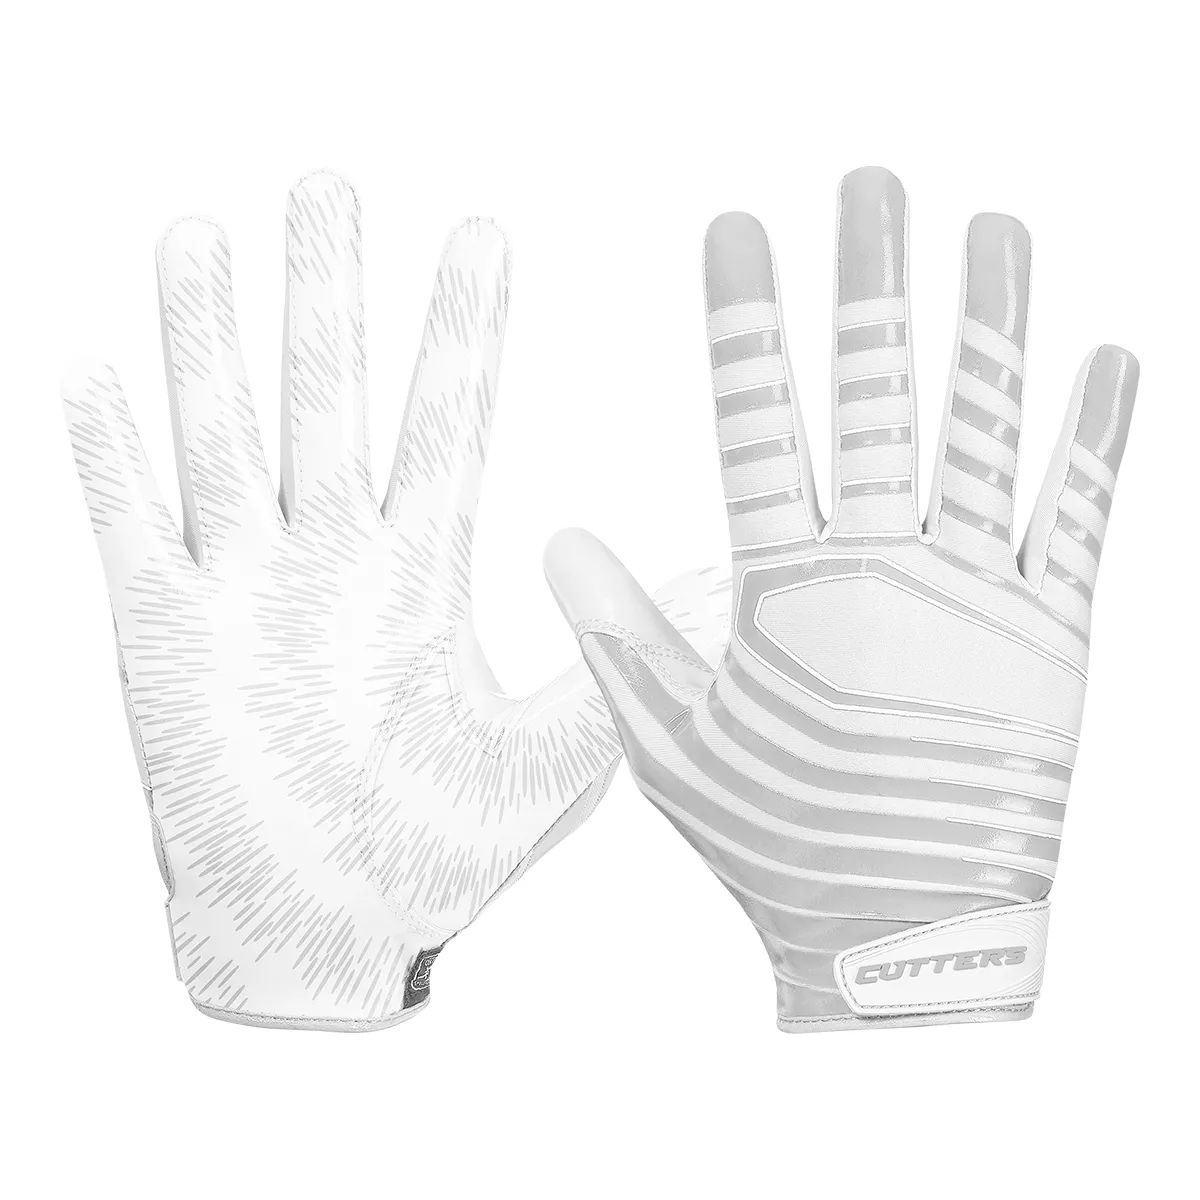 Cutters Rev Pro 4.0 Receiver Gloves - Black